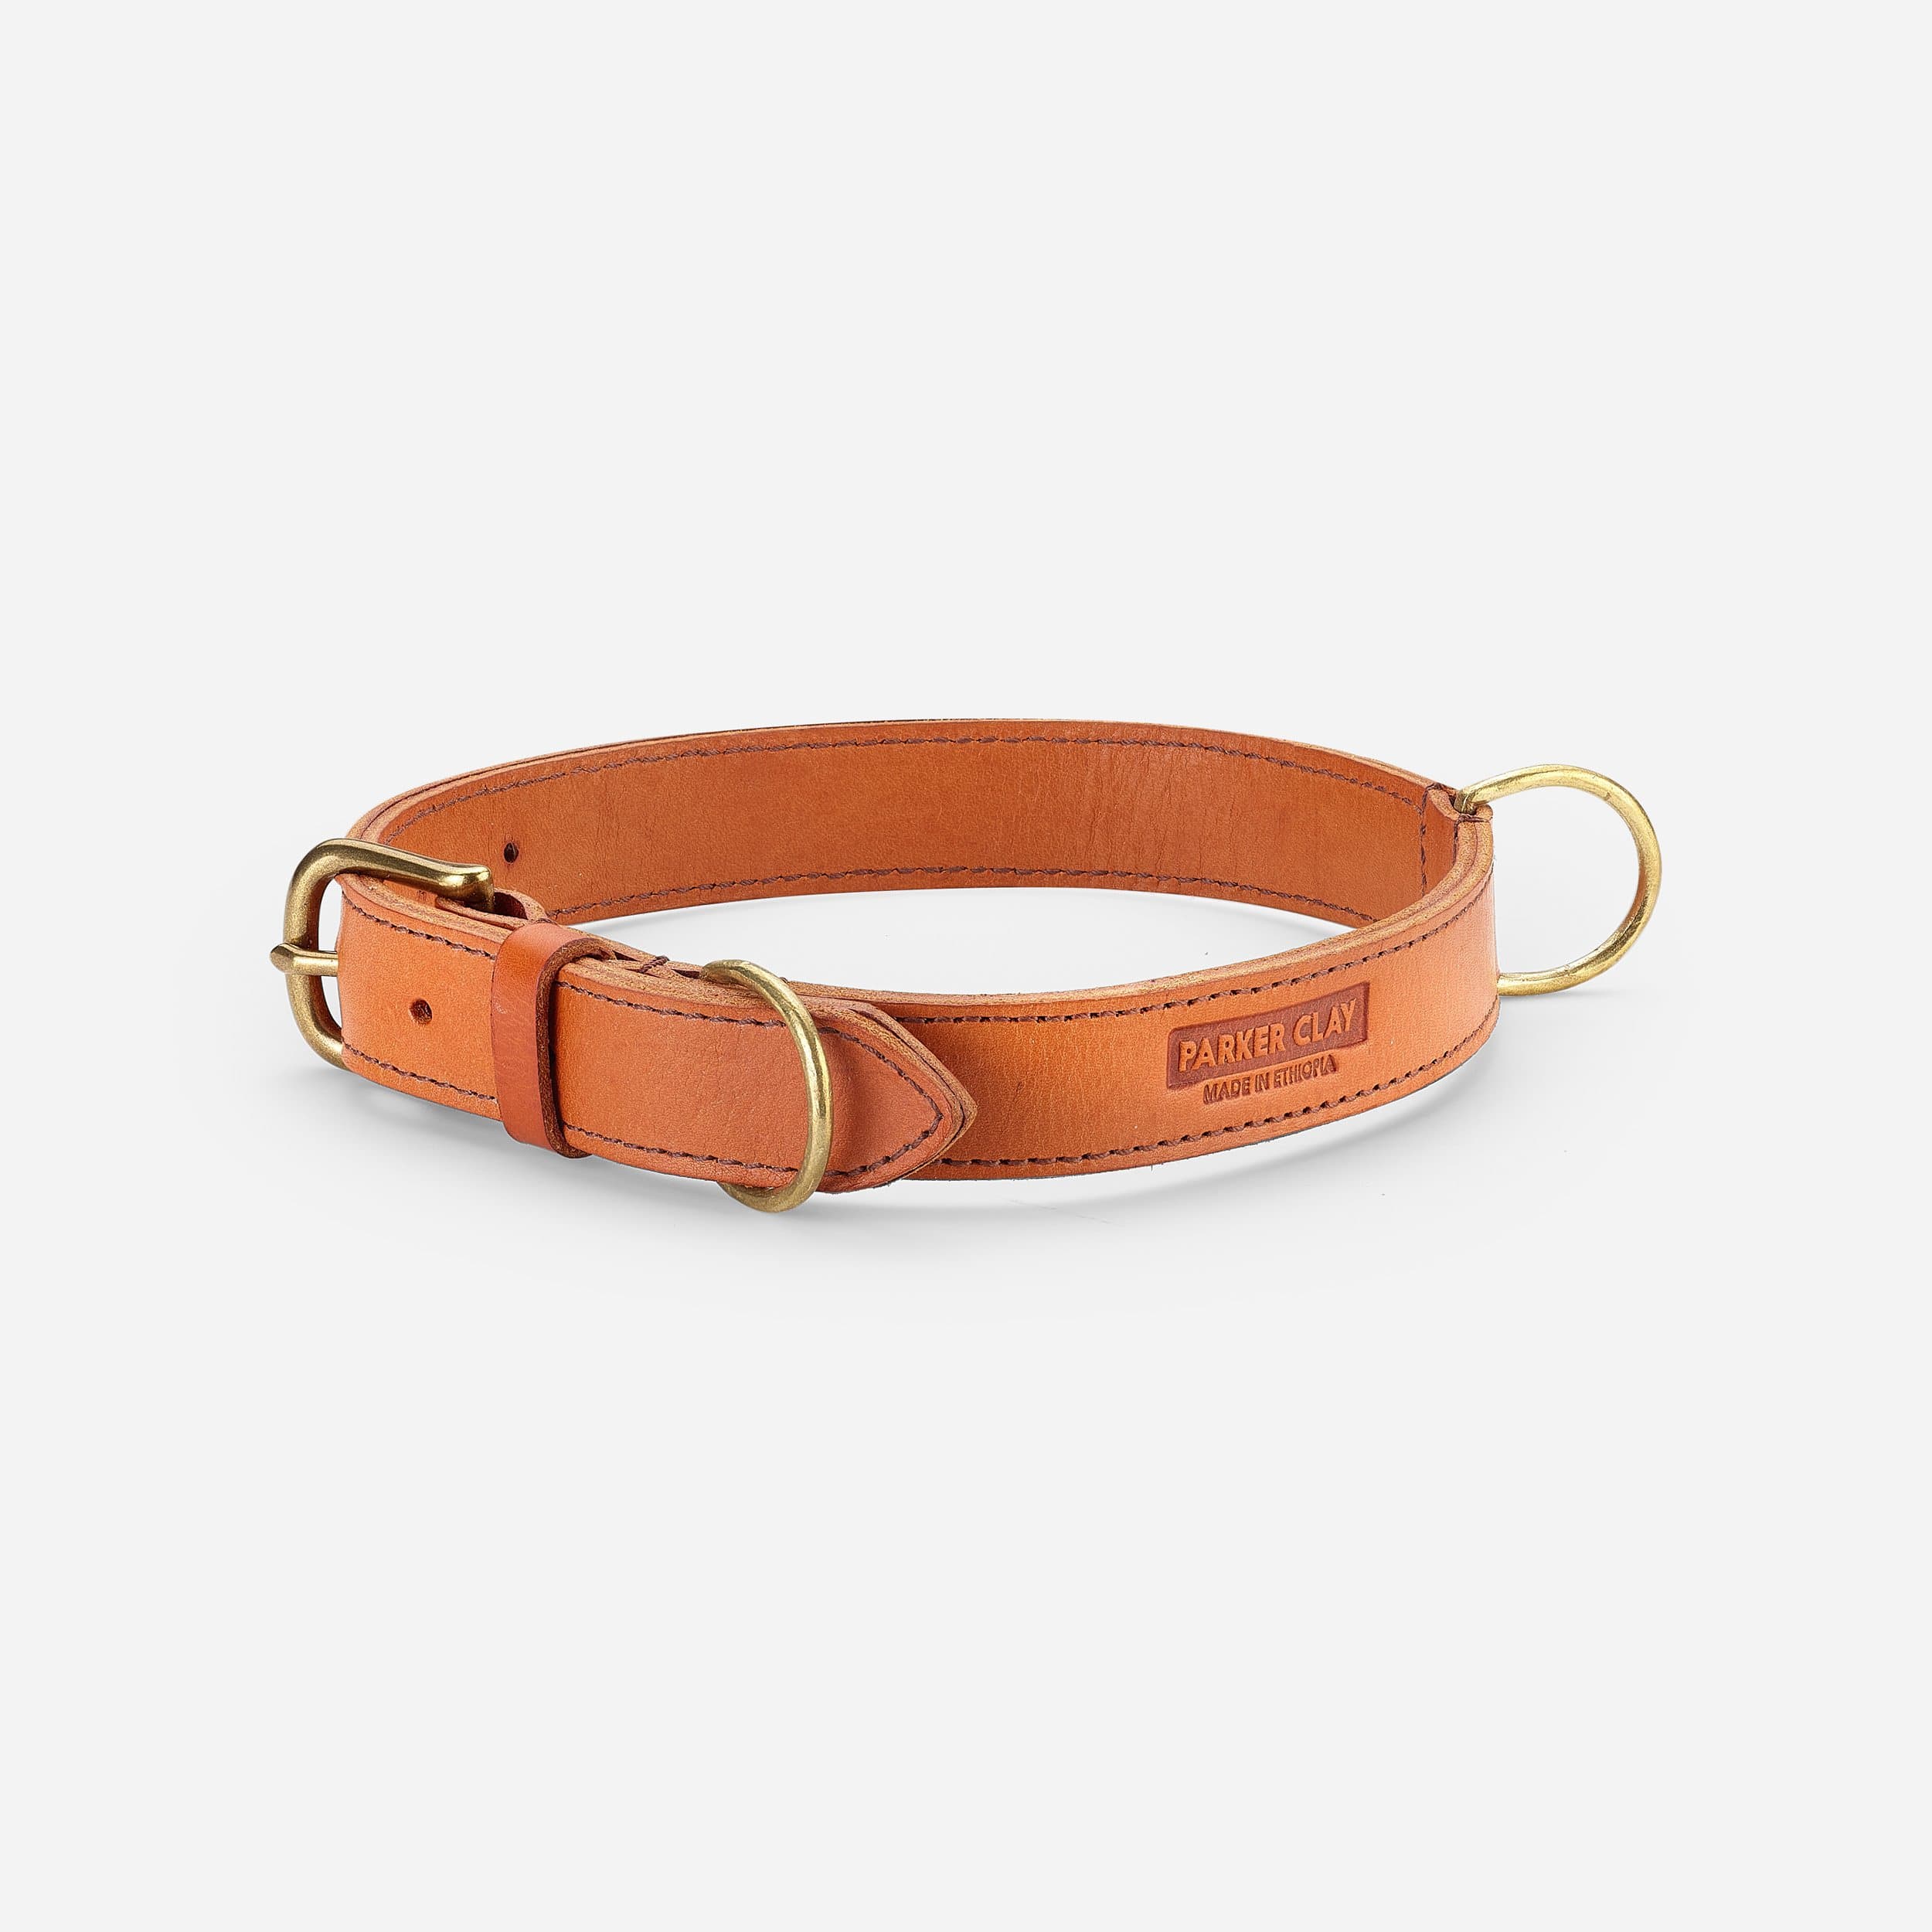 Aspen Dog Collar - Parker Clay 